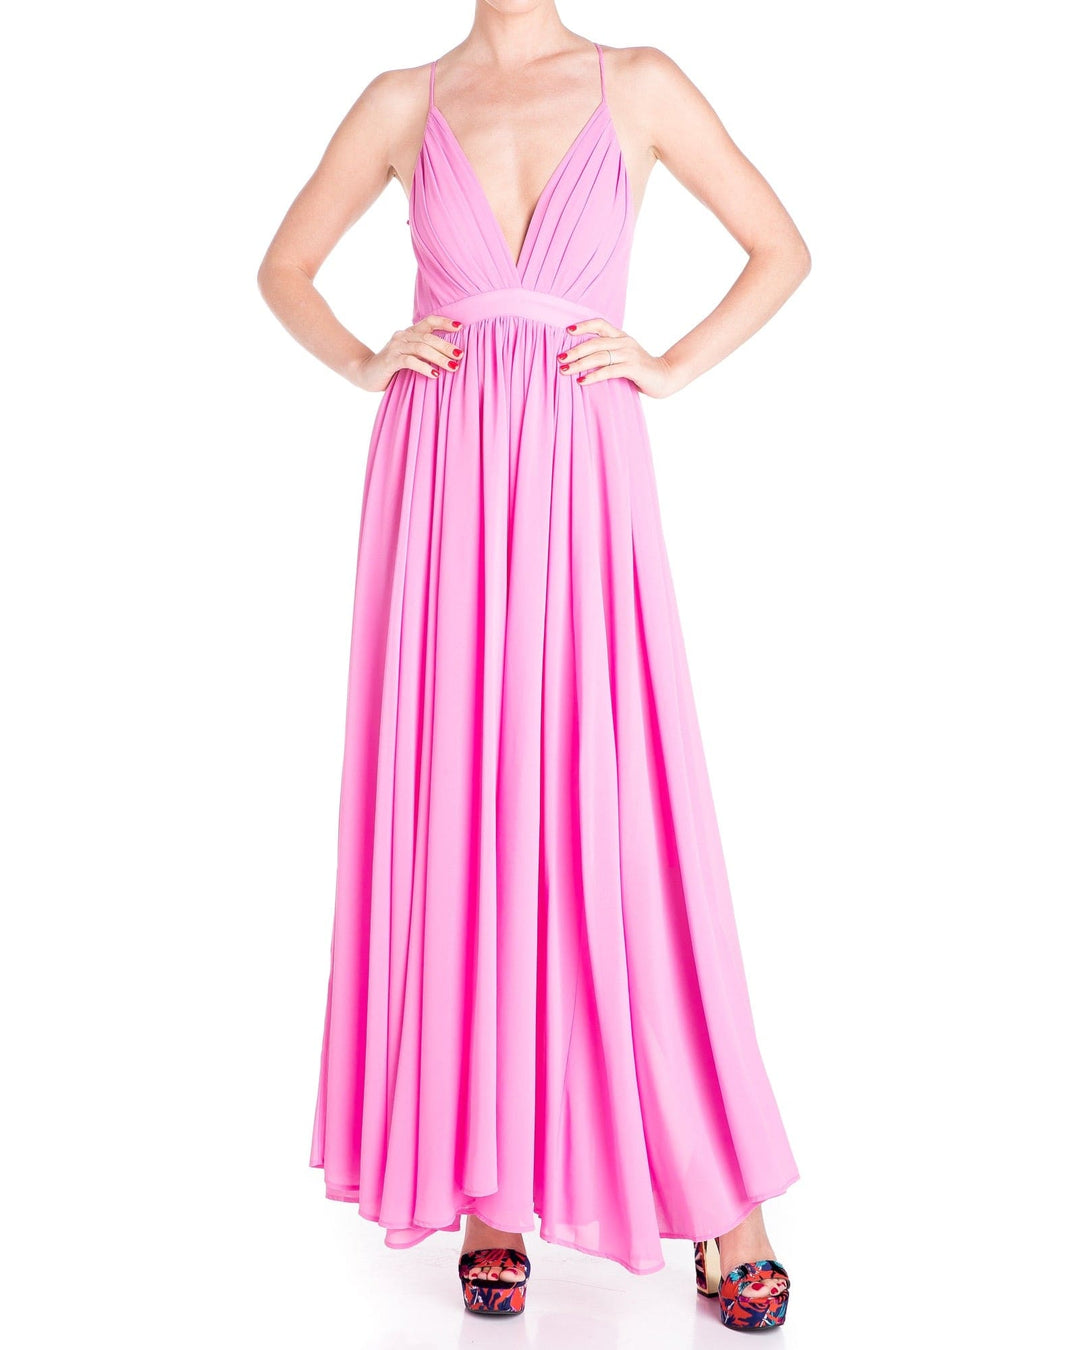 Enchanted Garden Maxi Dress - Bubblegum Pink by Meghan Fabulous